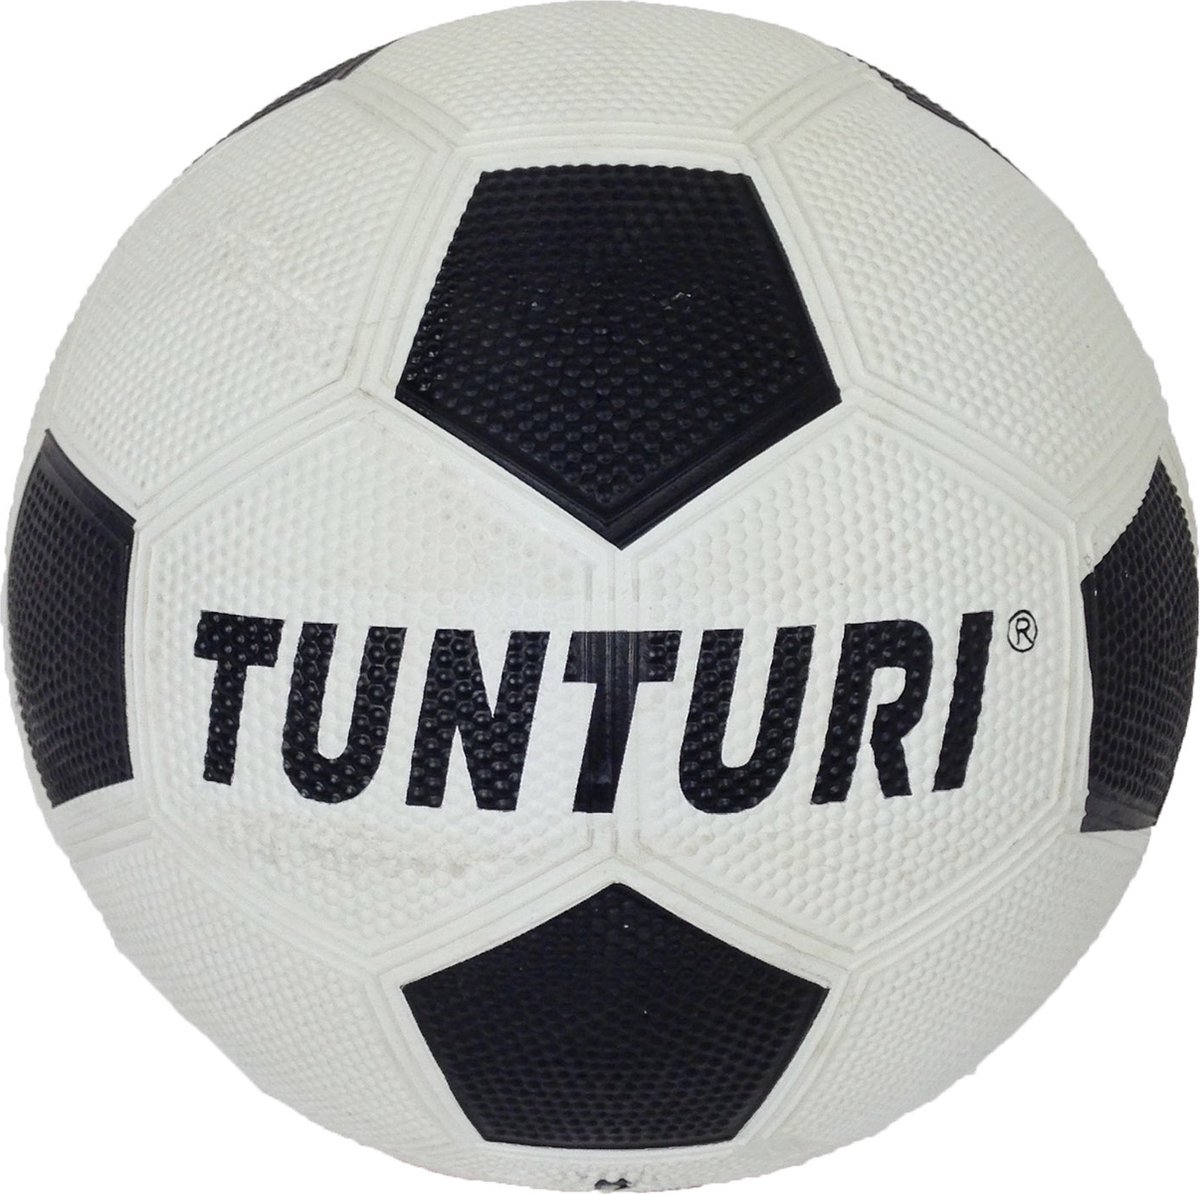 Tunturi Straatvoetbal -Street soccer ball - Straatvoetbal bal - Tunturi